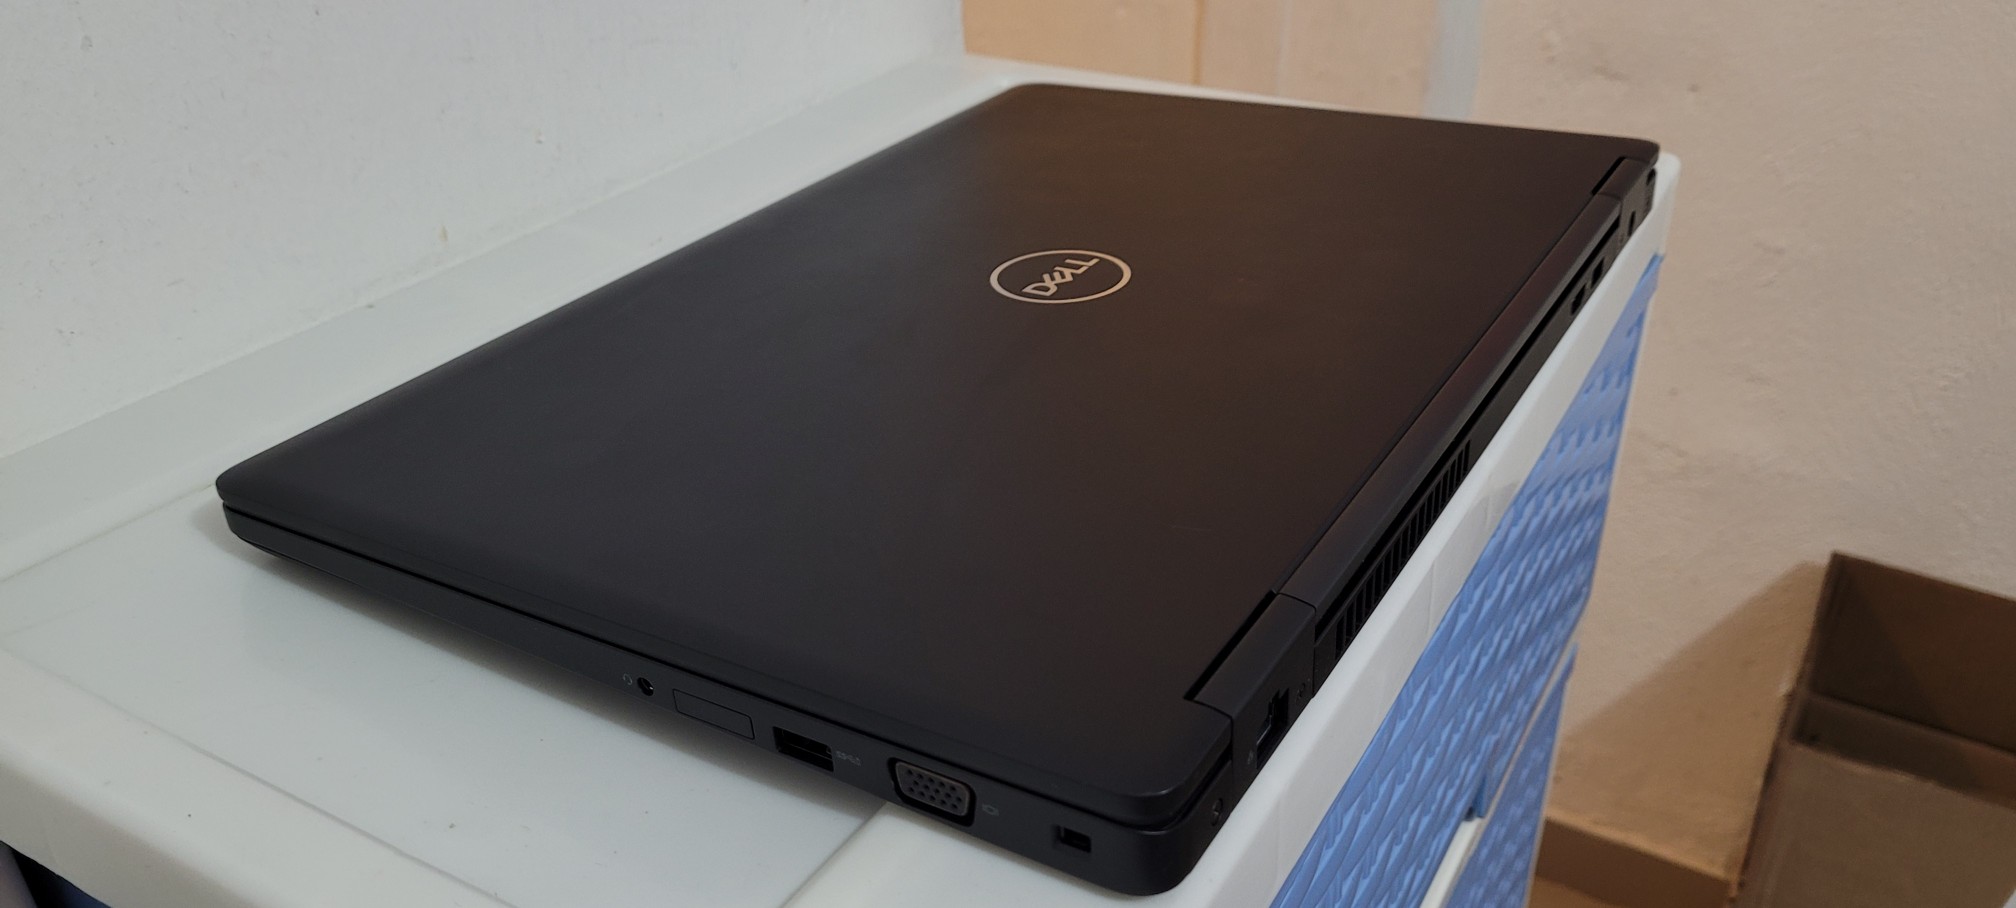 computadoras y laptops - Laptop Dell 5590 17 Pulg Core i5 8va Gen Ram 16gb ddr4 Disco 512gb SSD  2